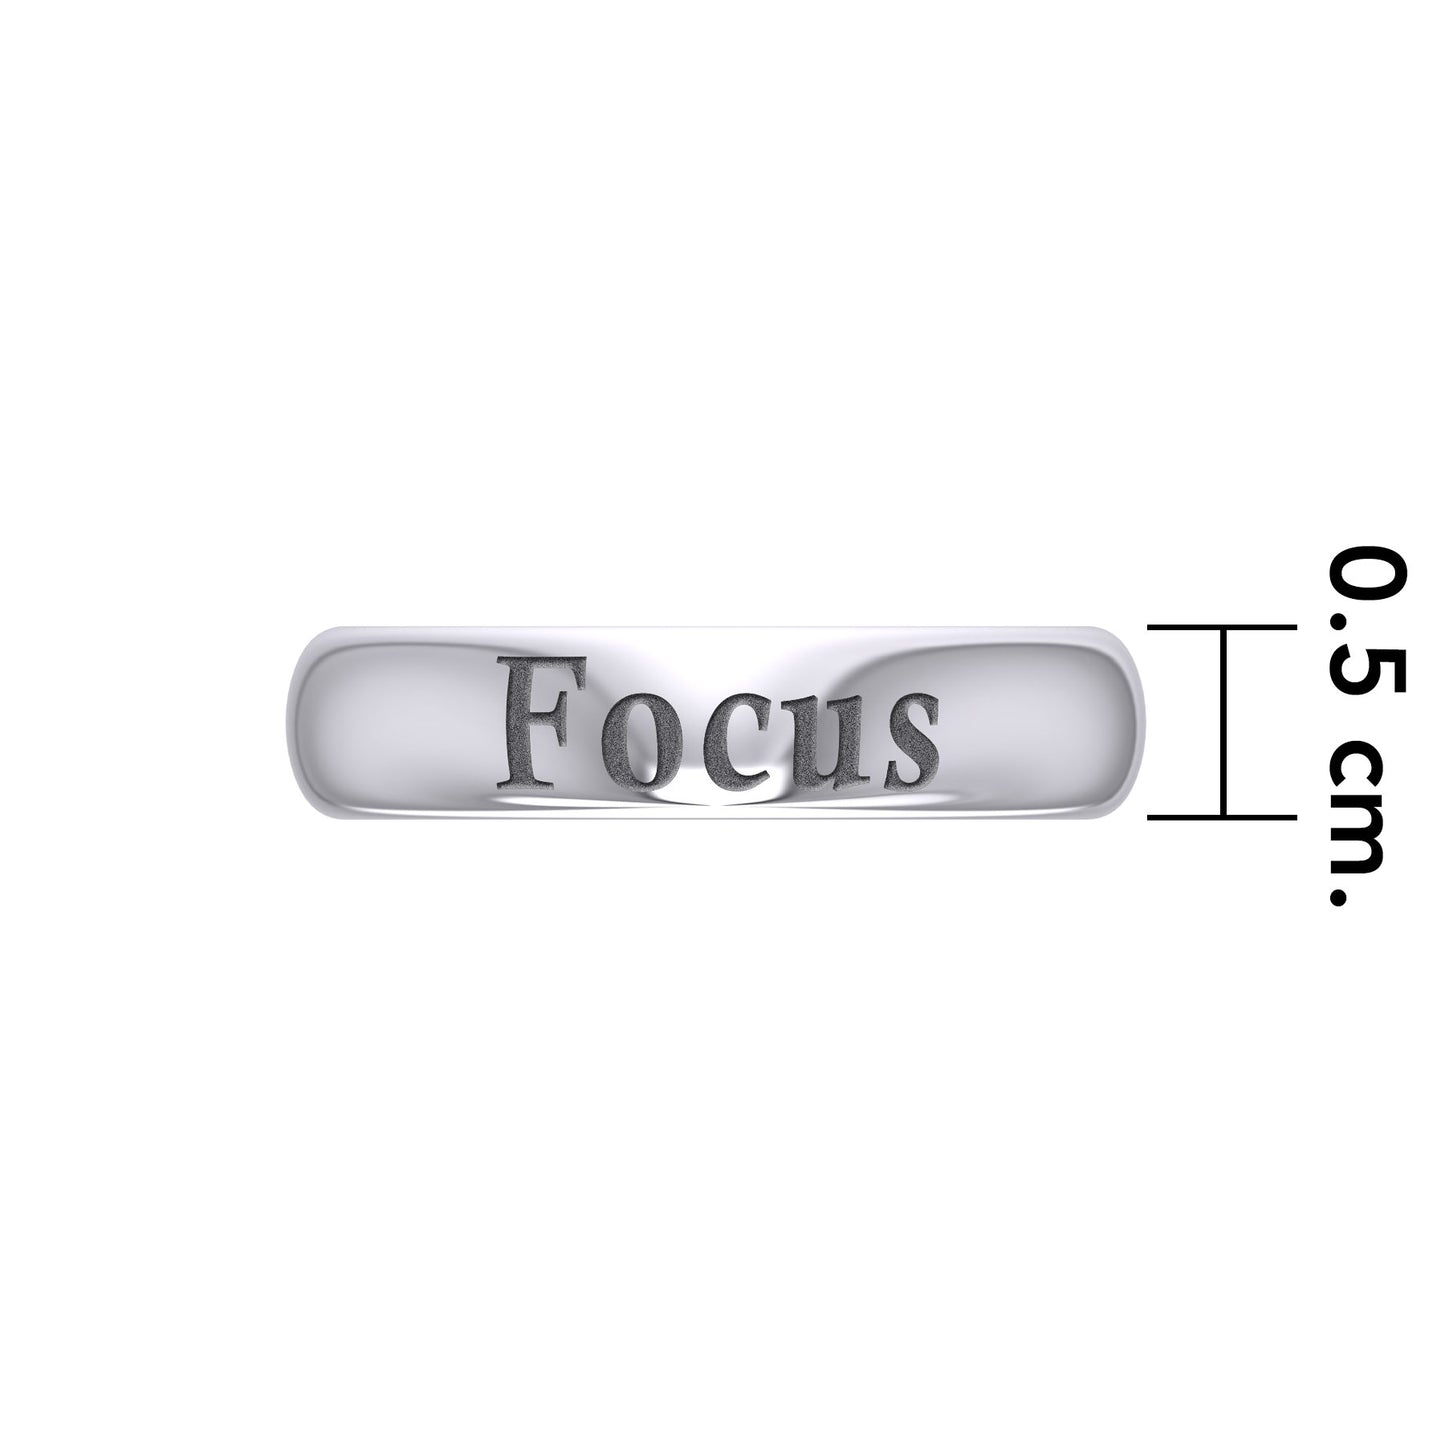 Focus Silver Band Ring TRI1097